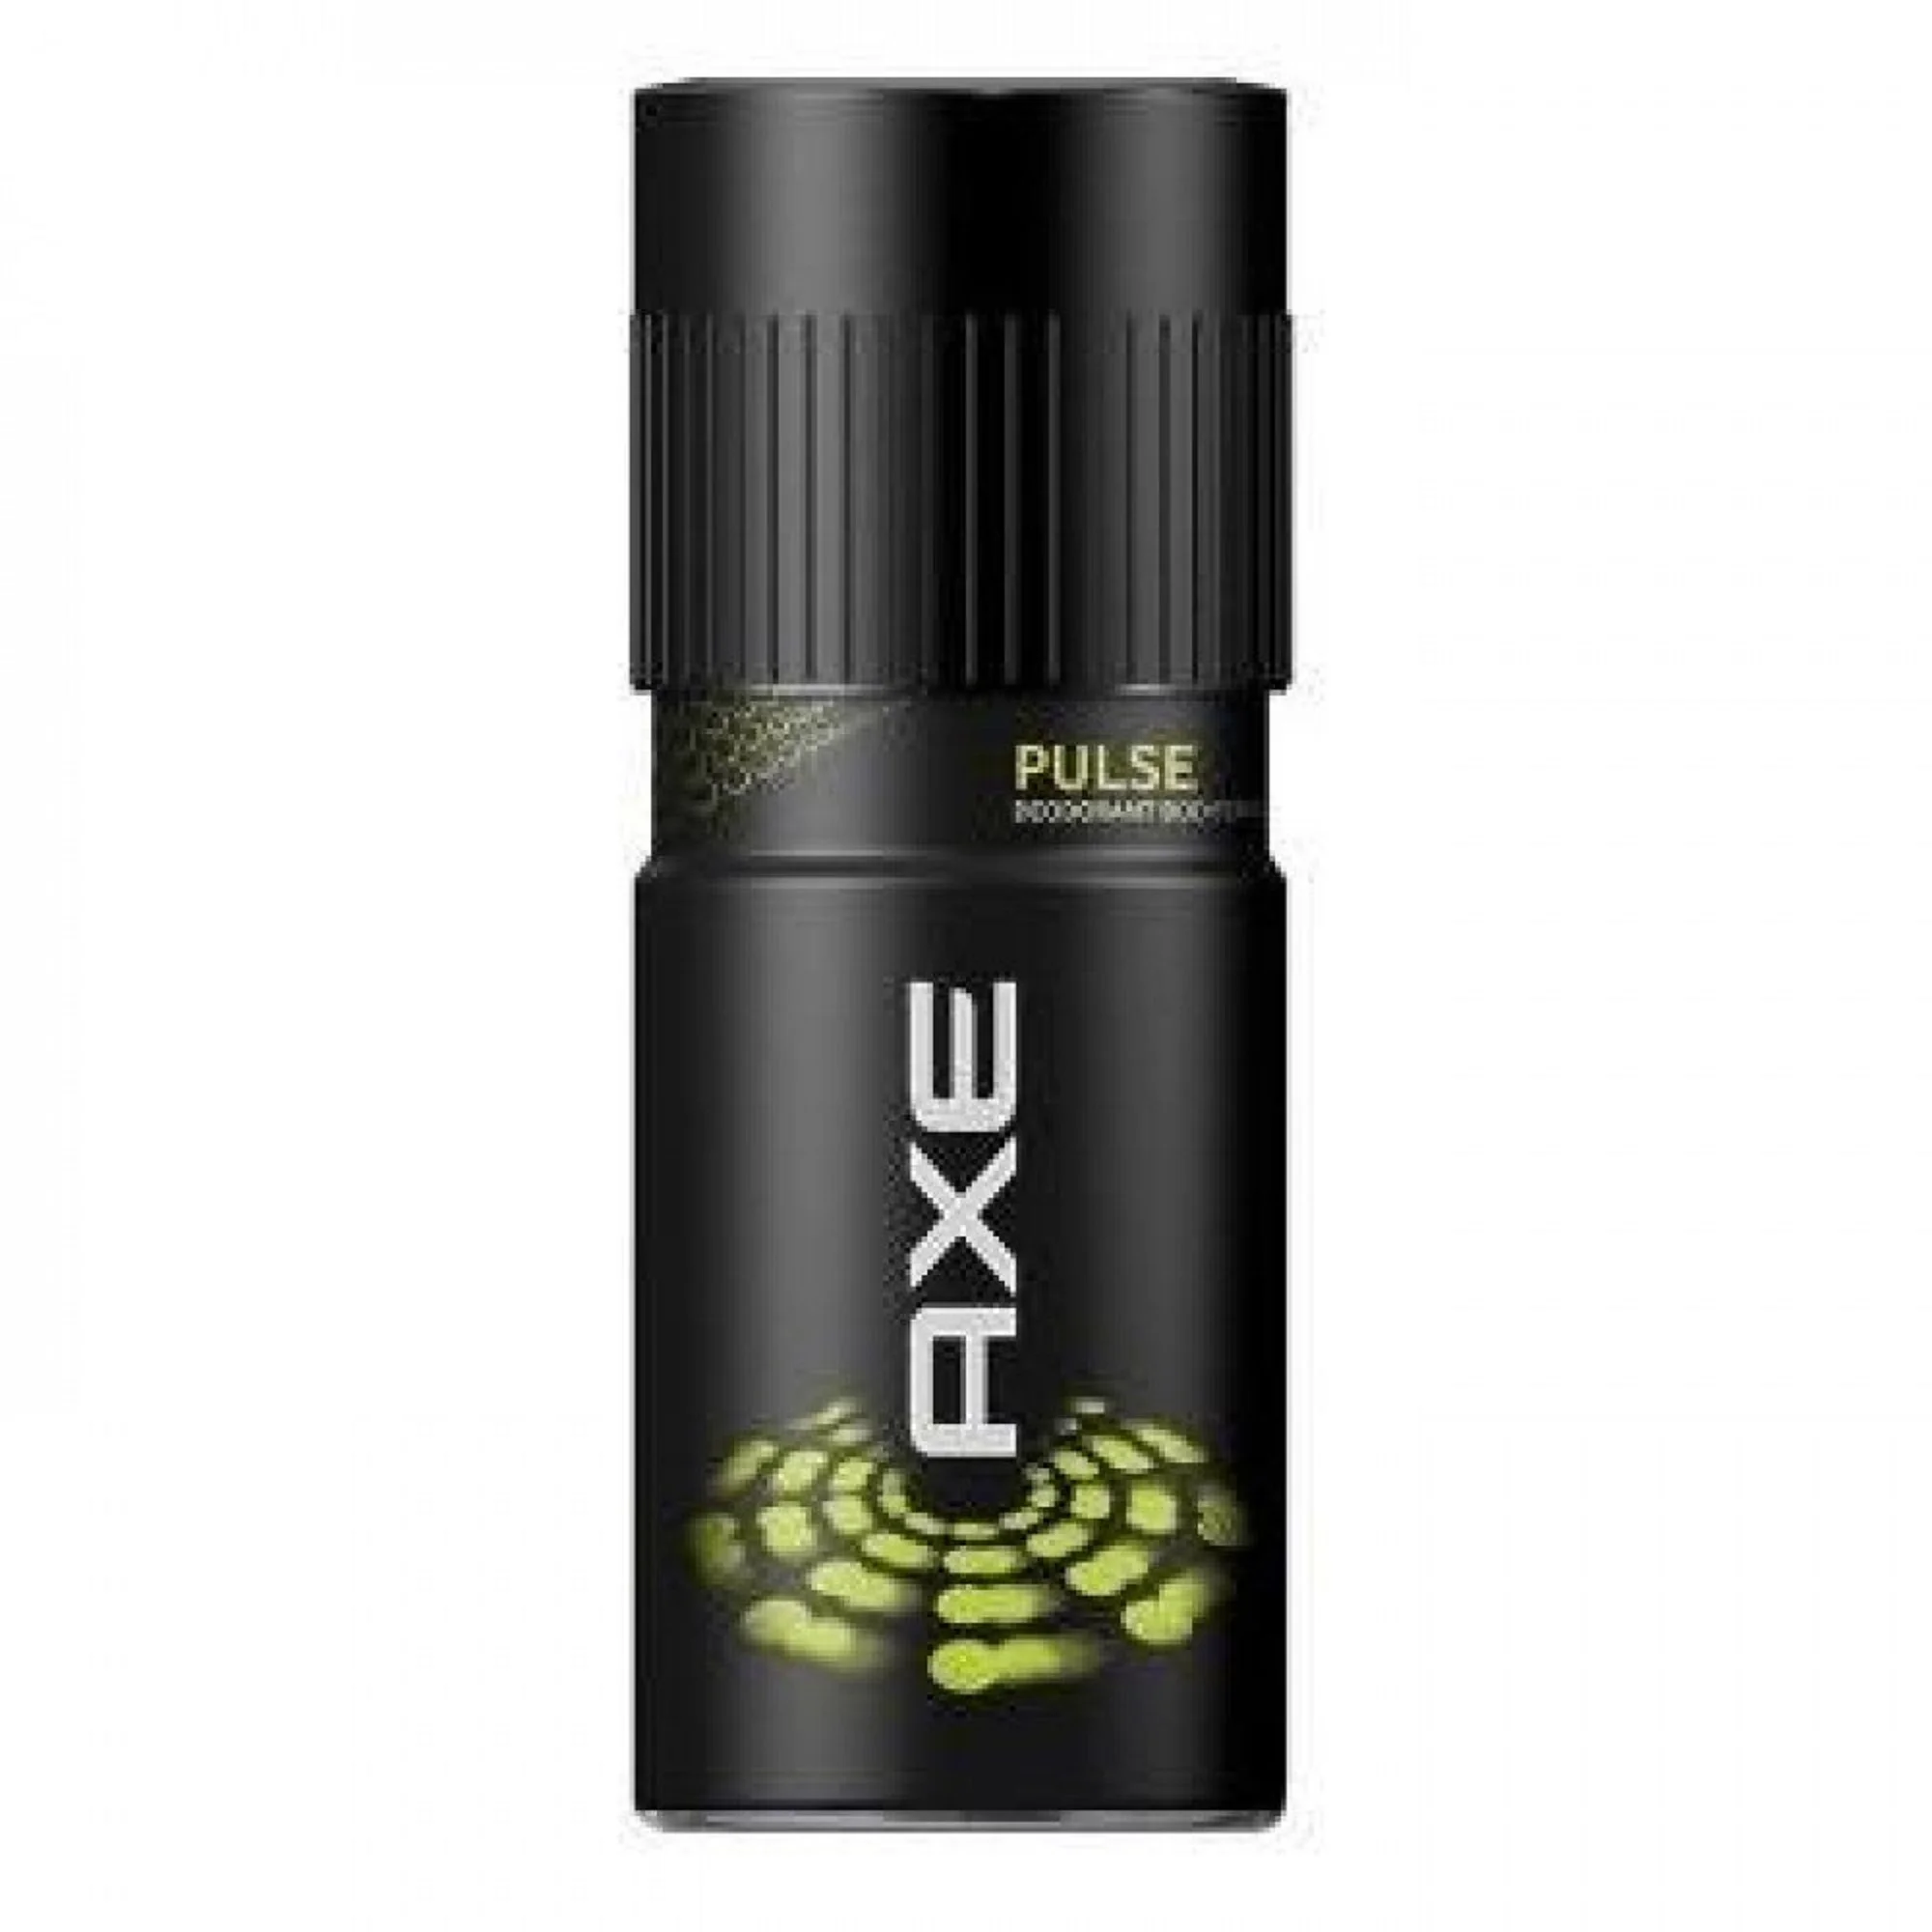 AXE 150ml New Deo Deodorants Body Spray